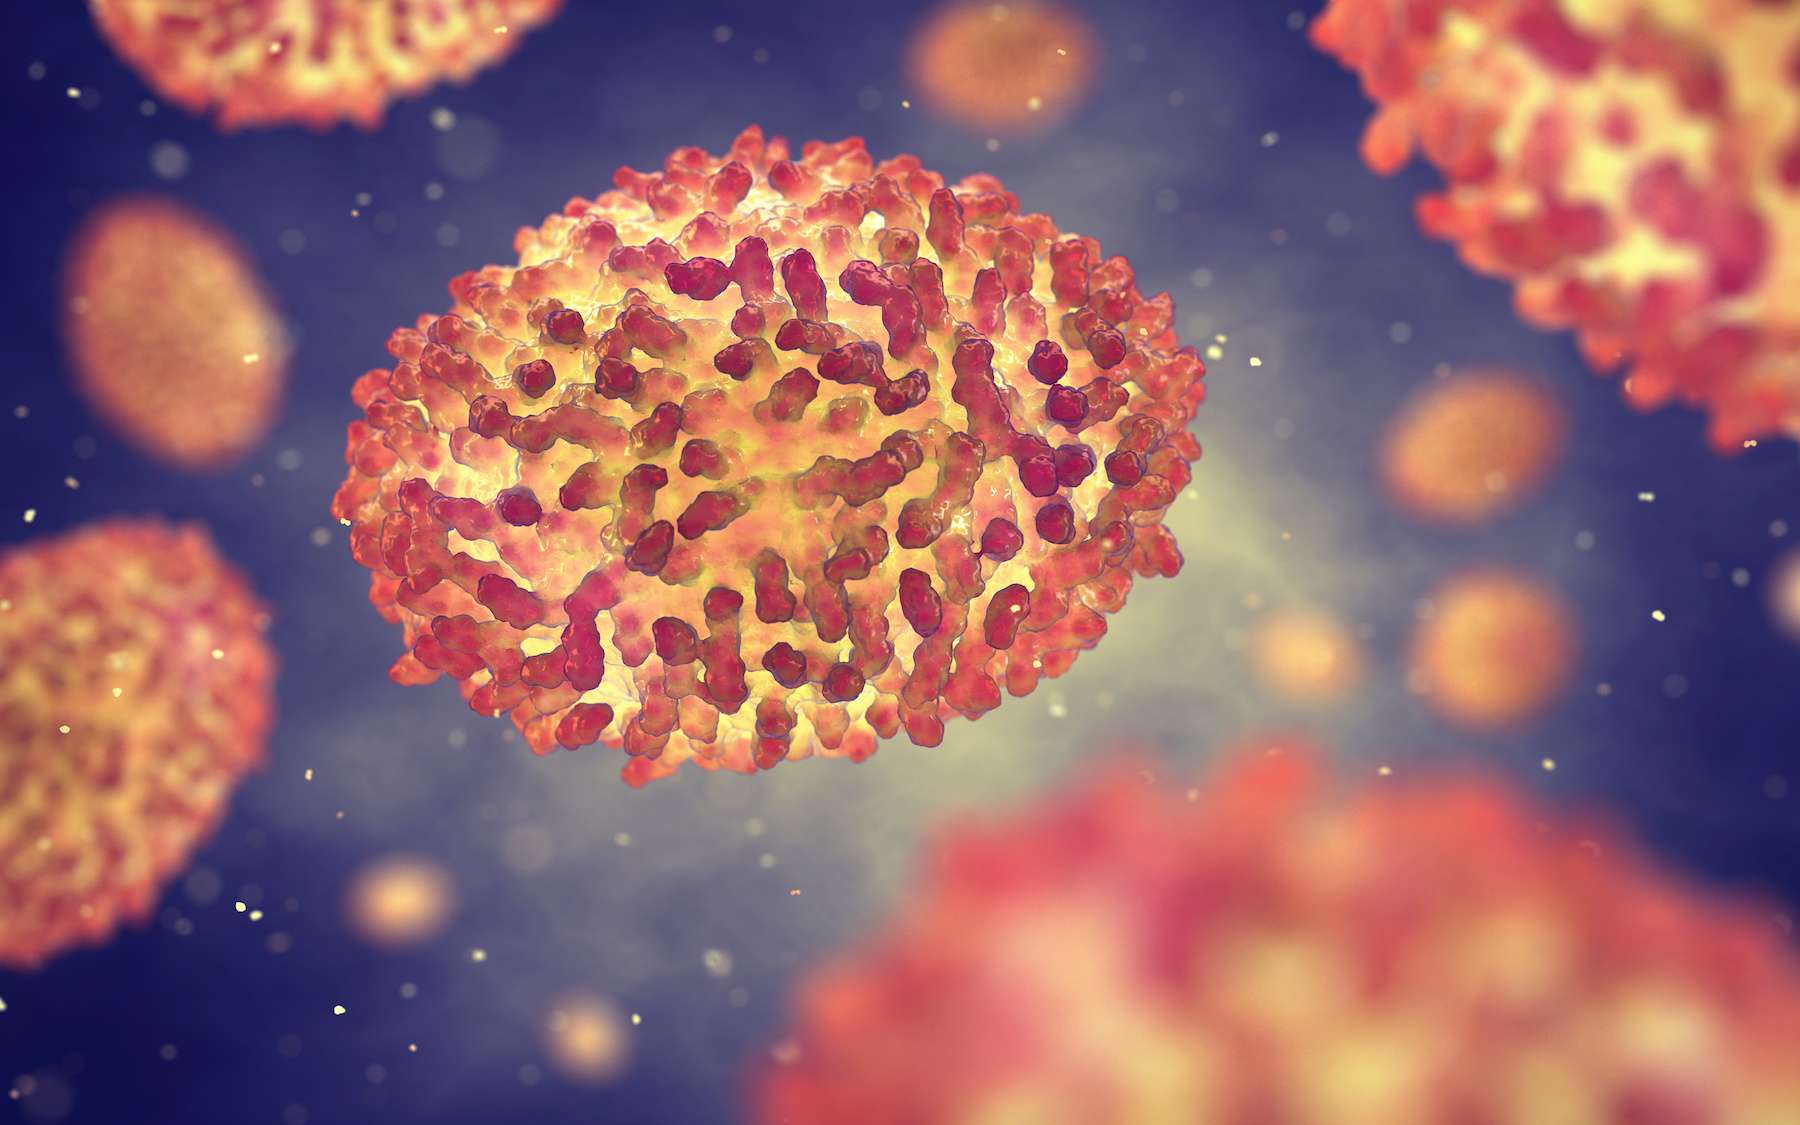 La vaccination a permis d’éradiquer le virus de la variole. © nobeastsofierce, Adobe Stock